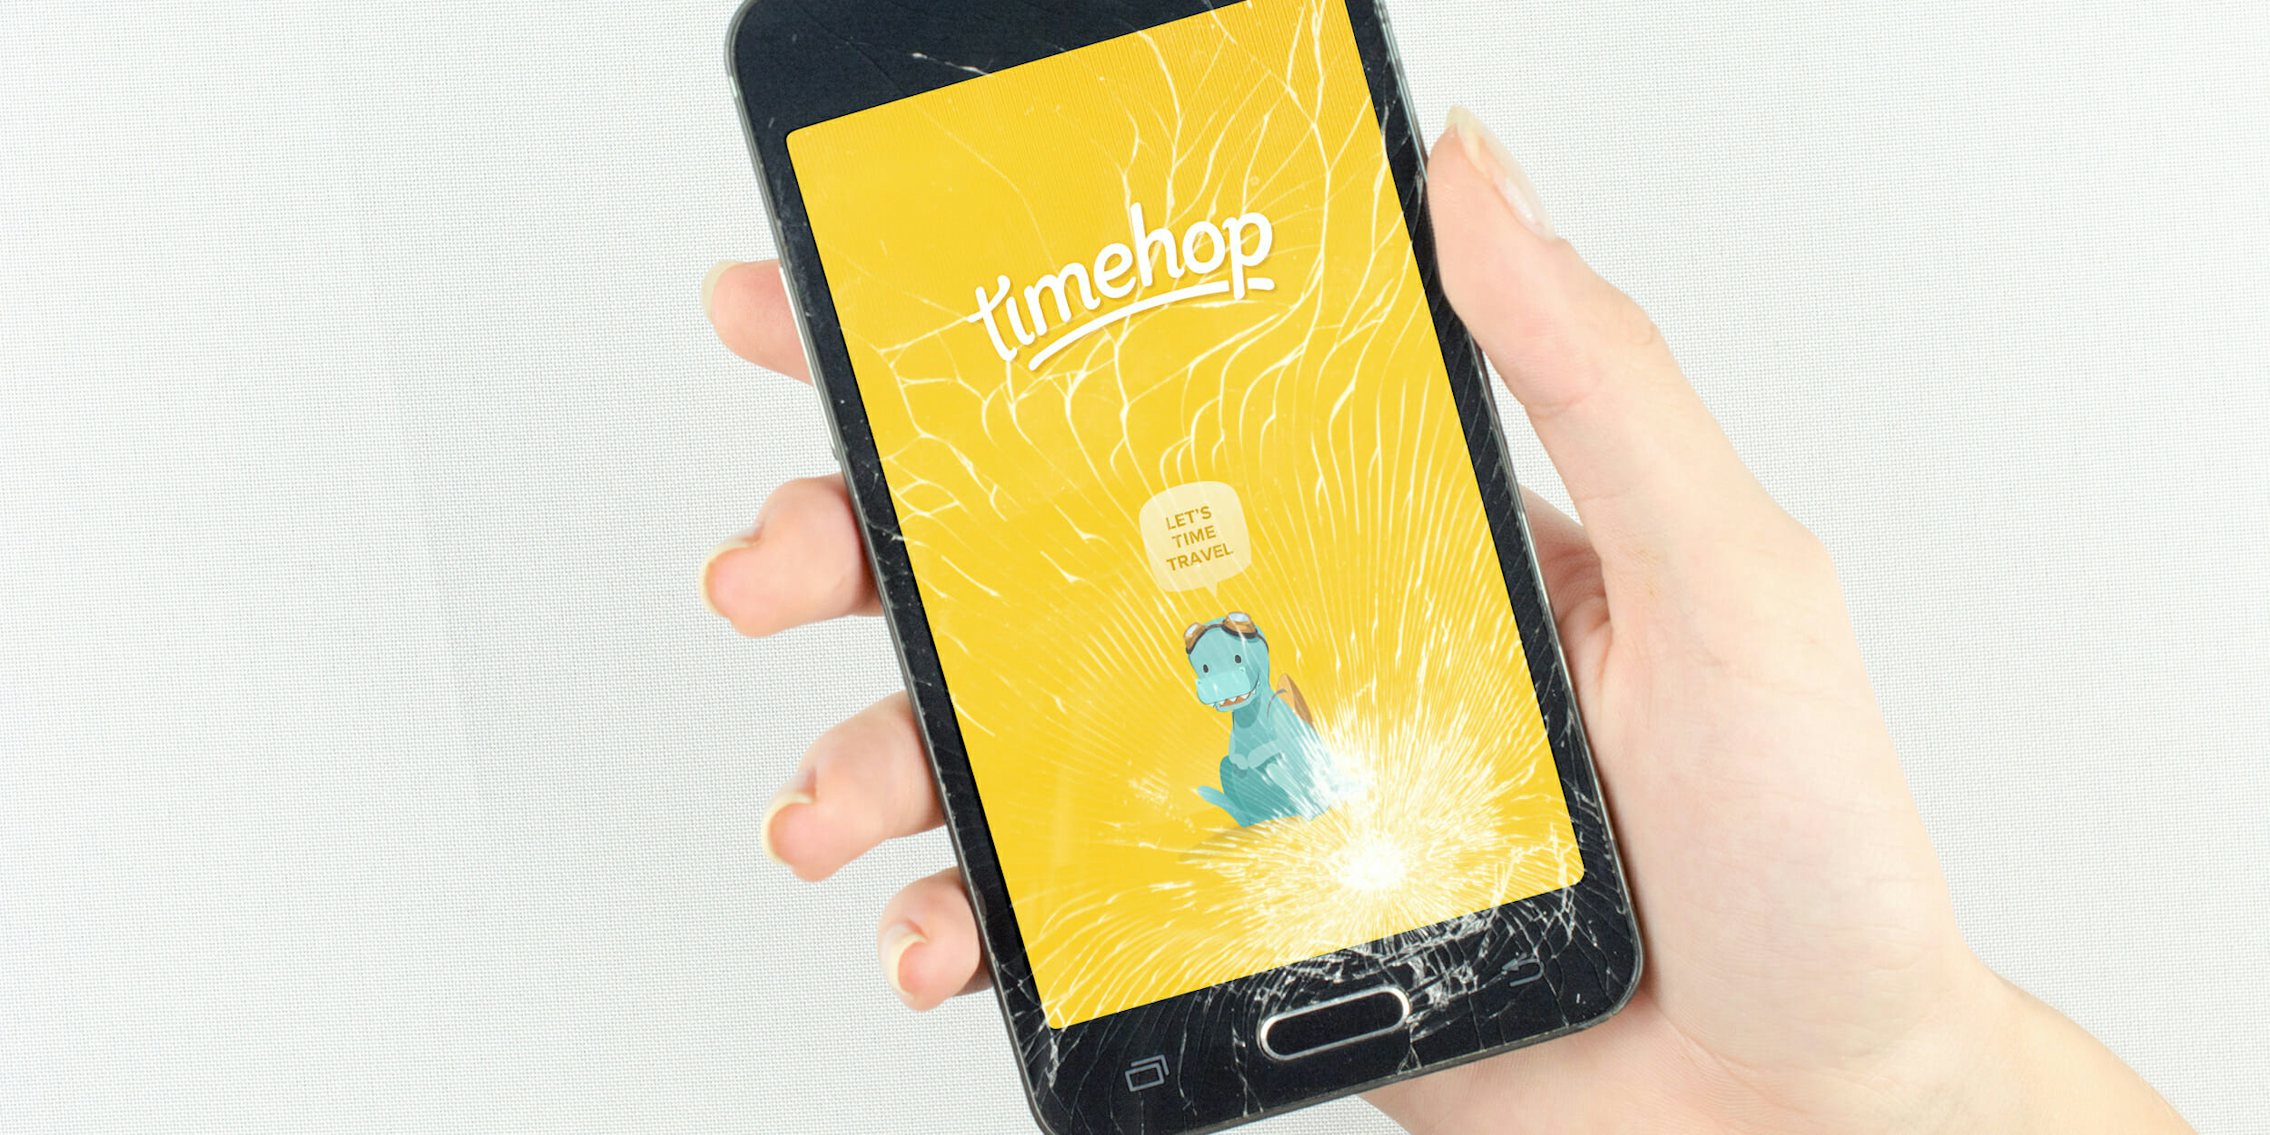 Timehop app on phone with broken screen